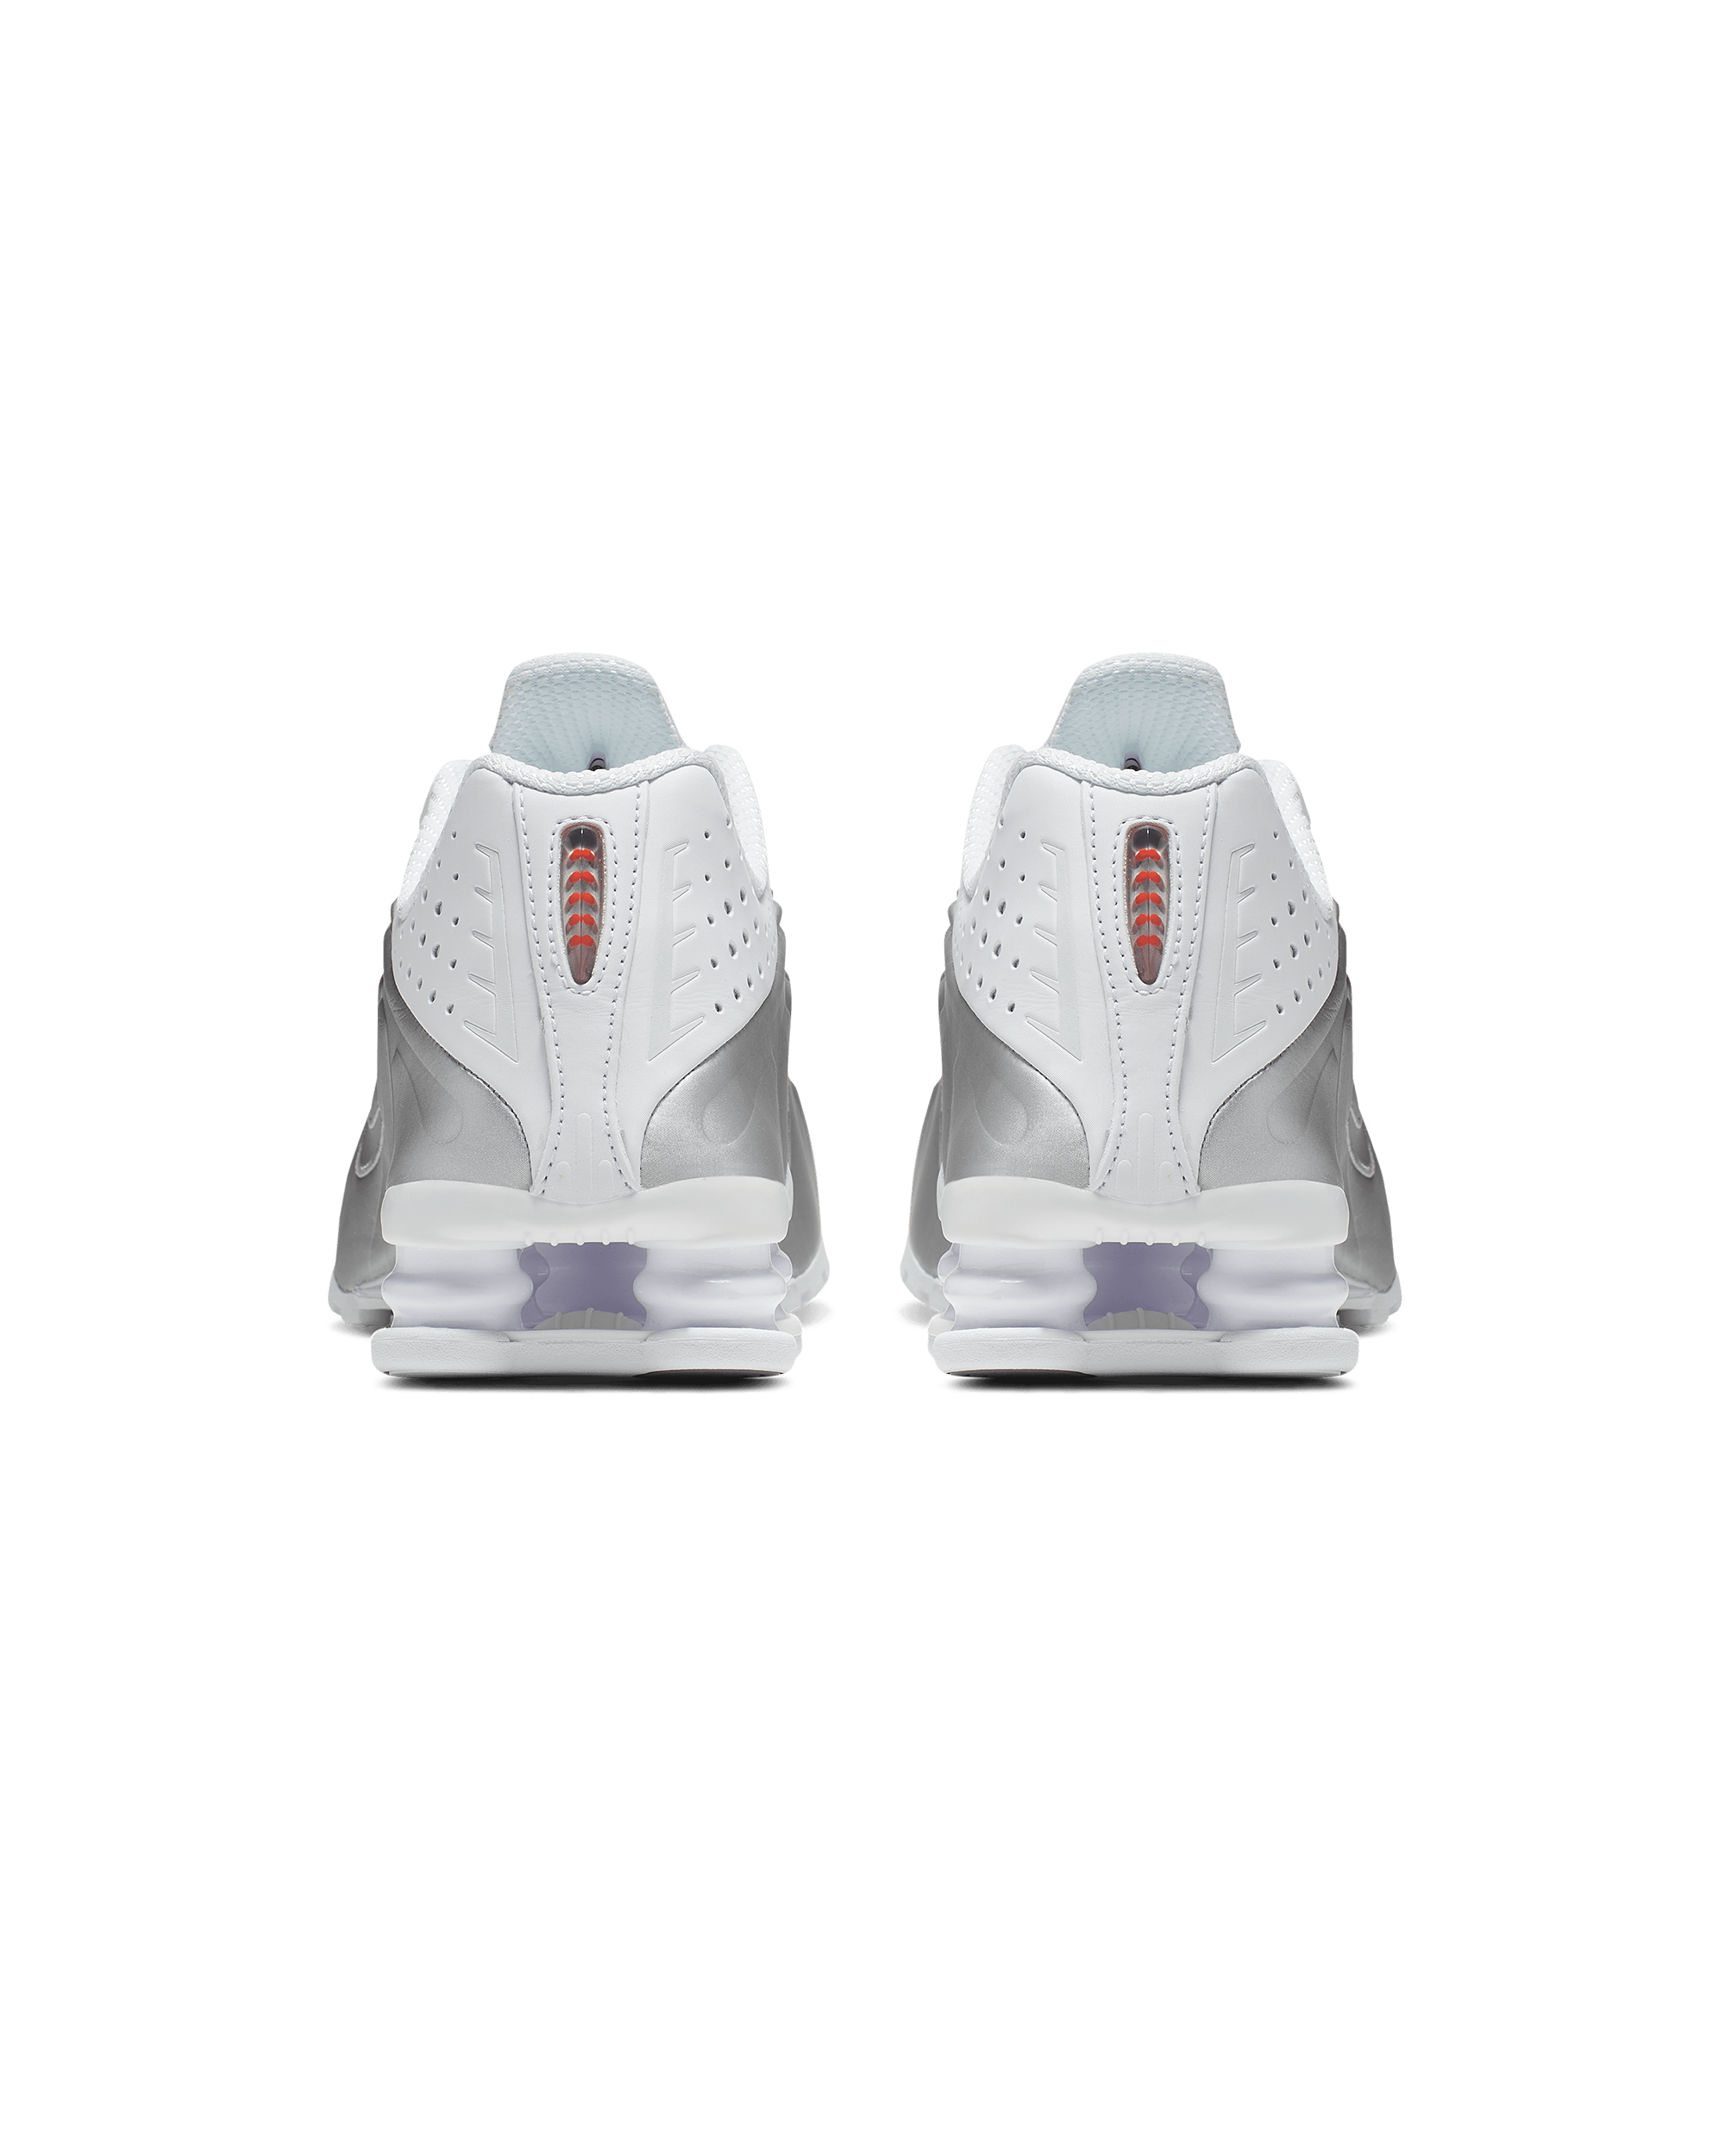 Womens Nike Shox R4 - White / Metallic Silver / Max Orange